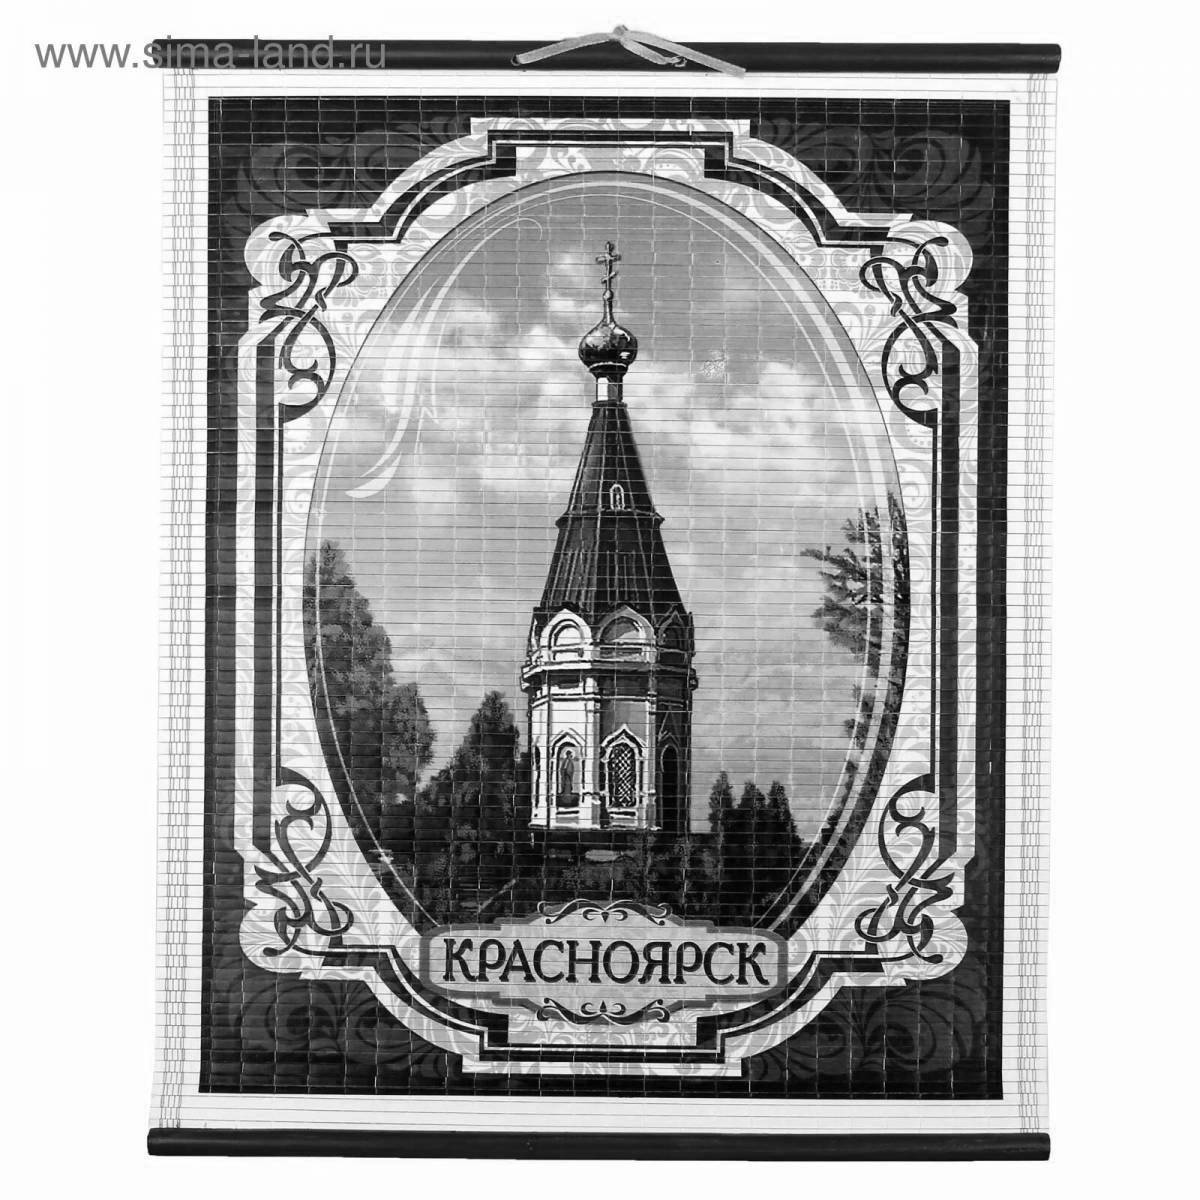 Elegant chapel Krasnoyarsk coloring book